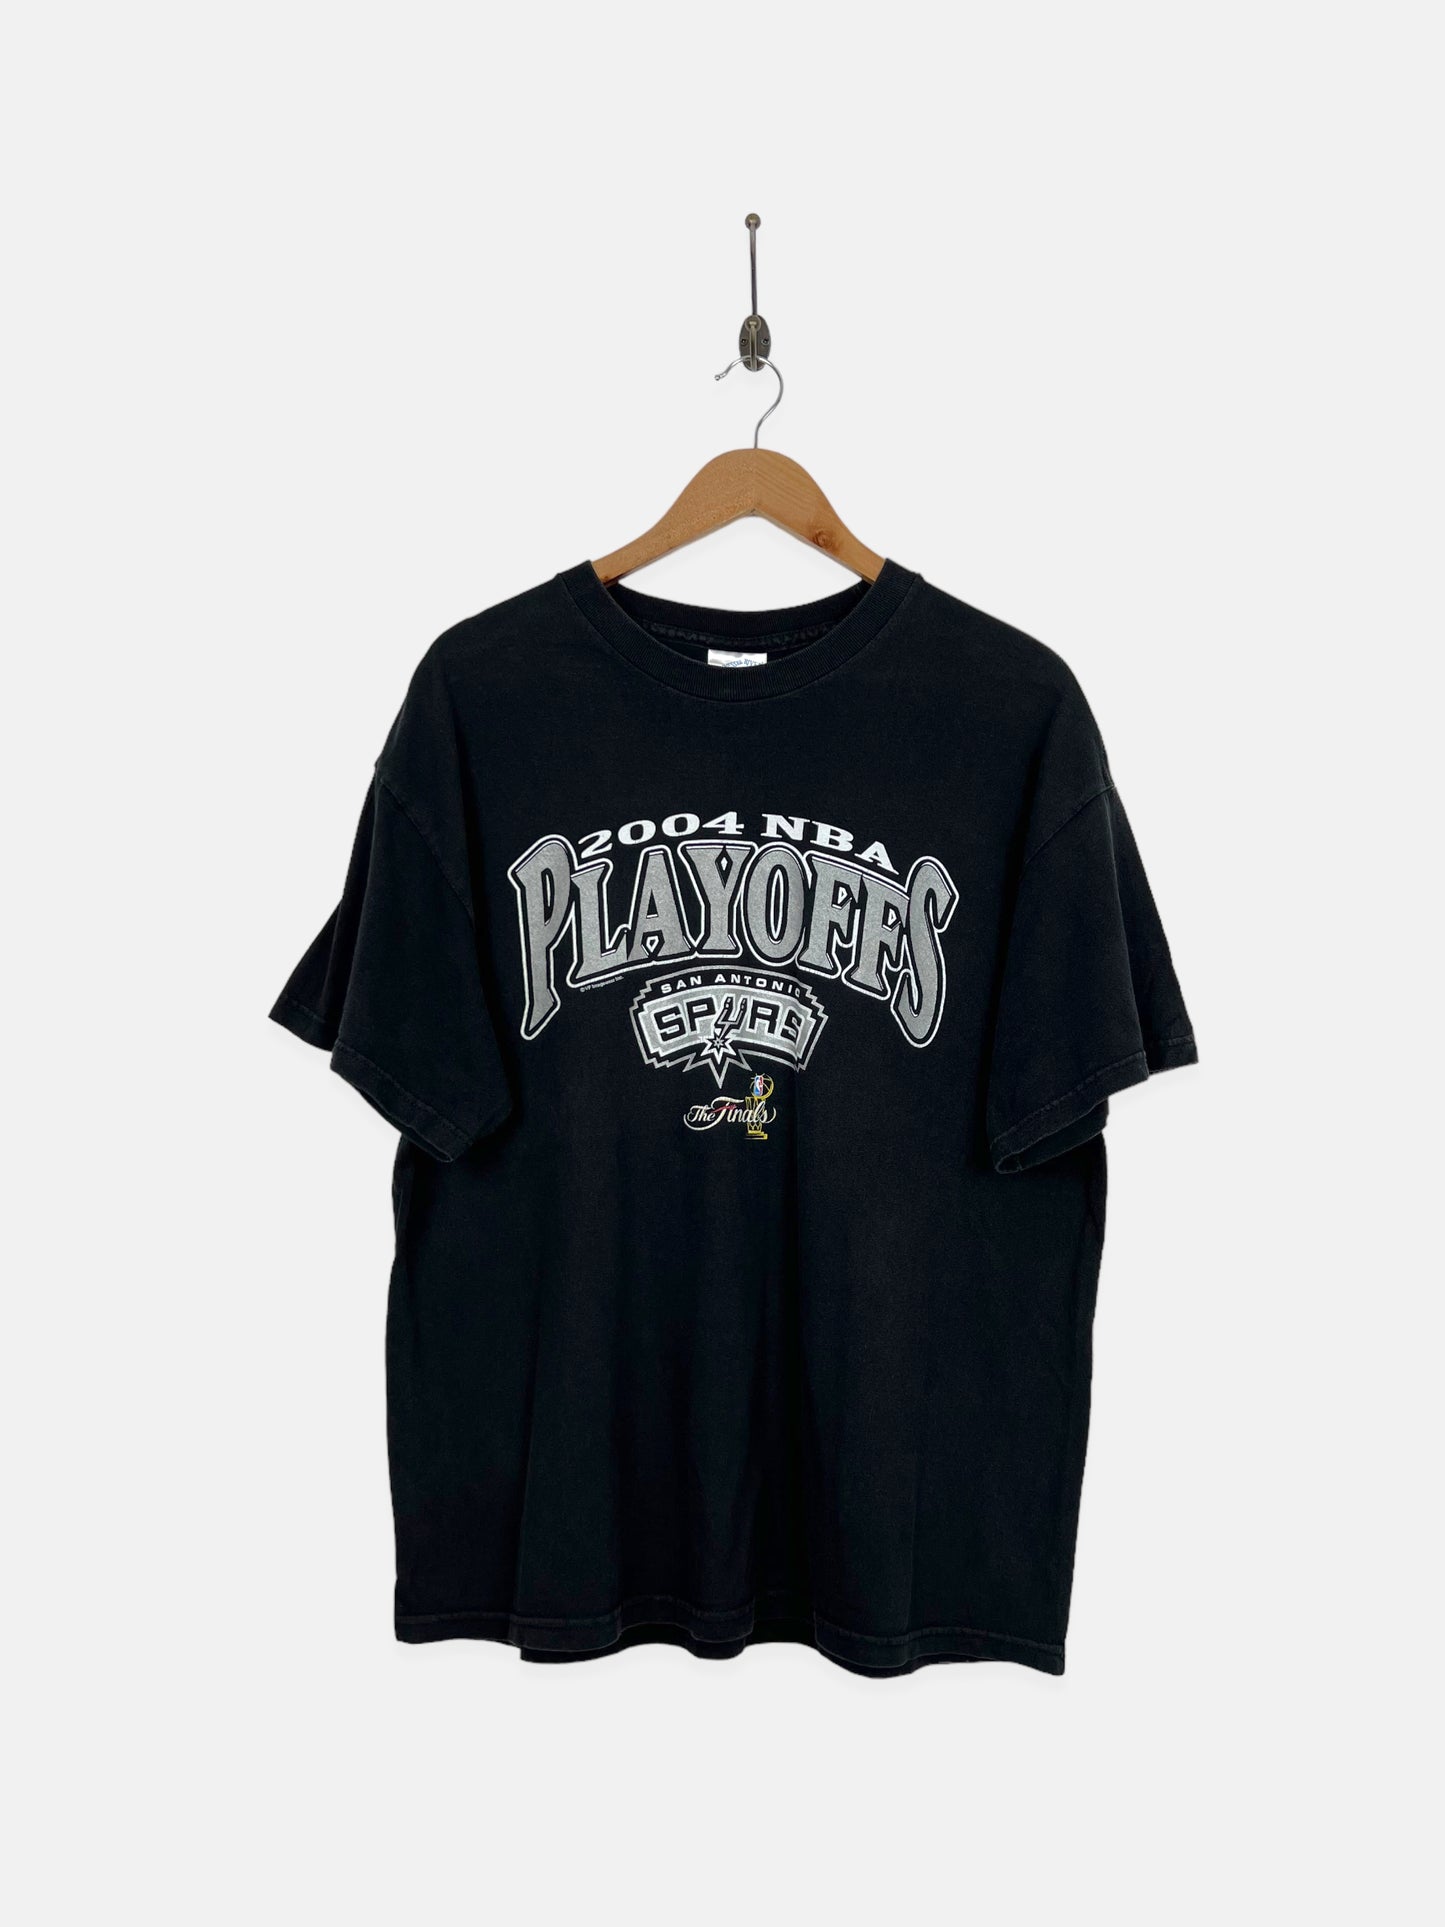 San Antonio Spurs 2004 NBA Playoffs Vintage T-Shirt Size M